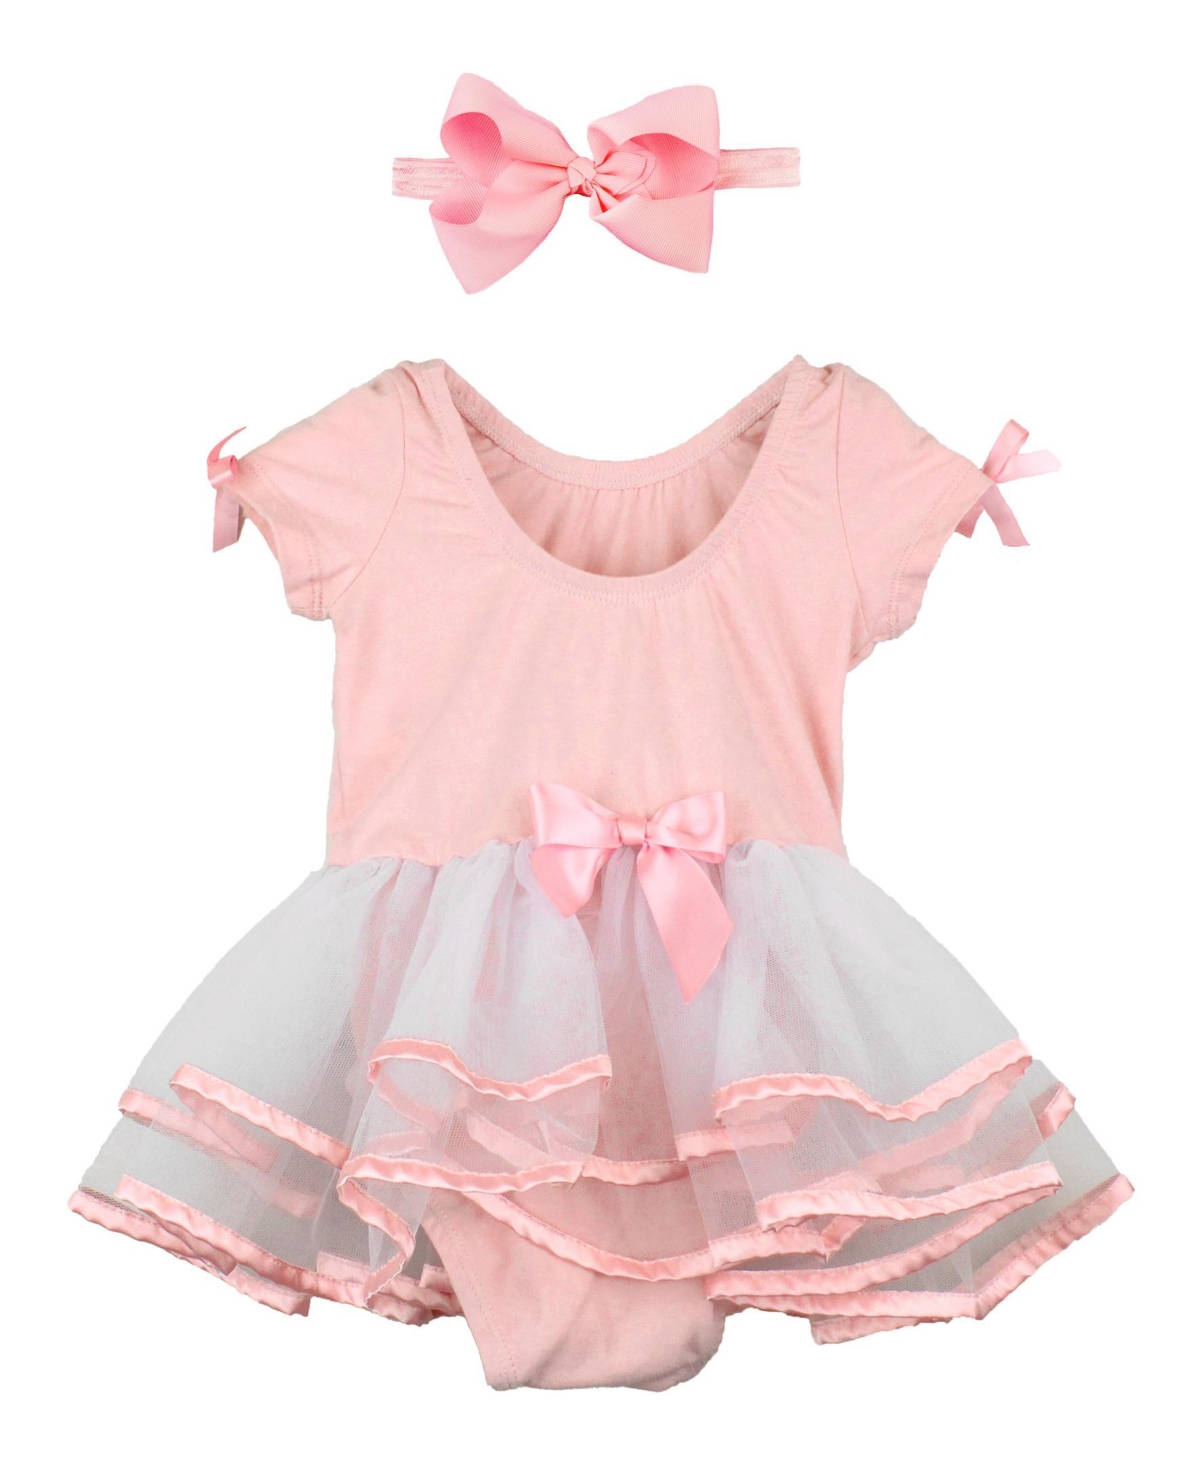 Rufflebutts Baby Girls Tutu Leotard Dress And Bow Headband, 2 Piece Set In Pink